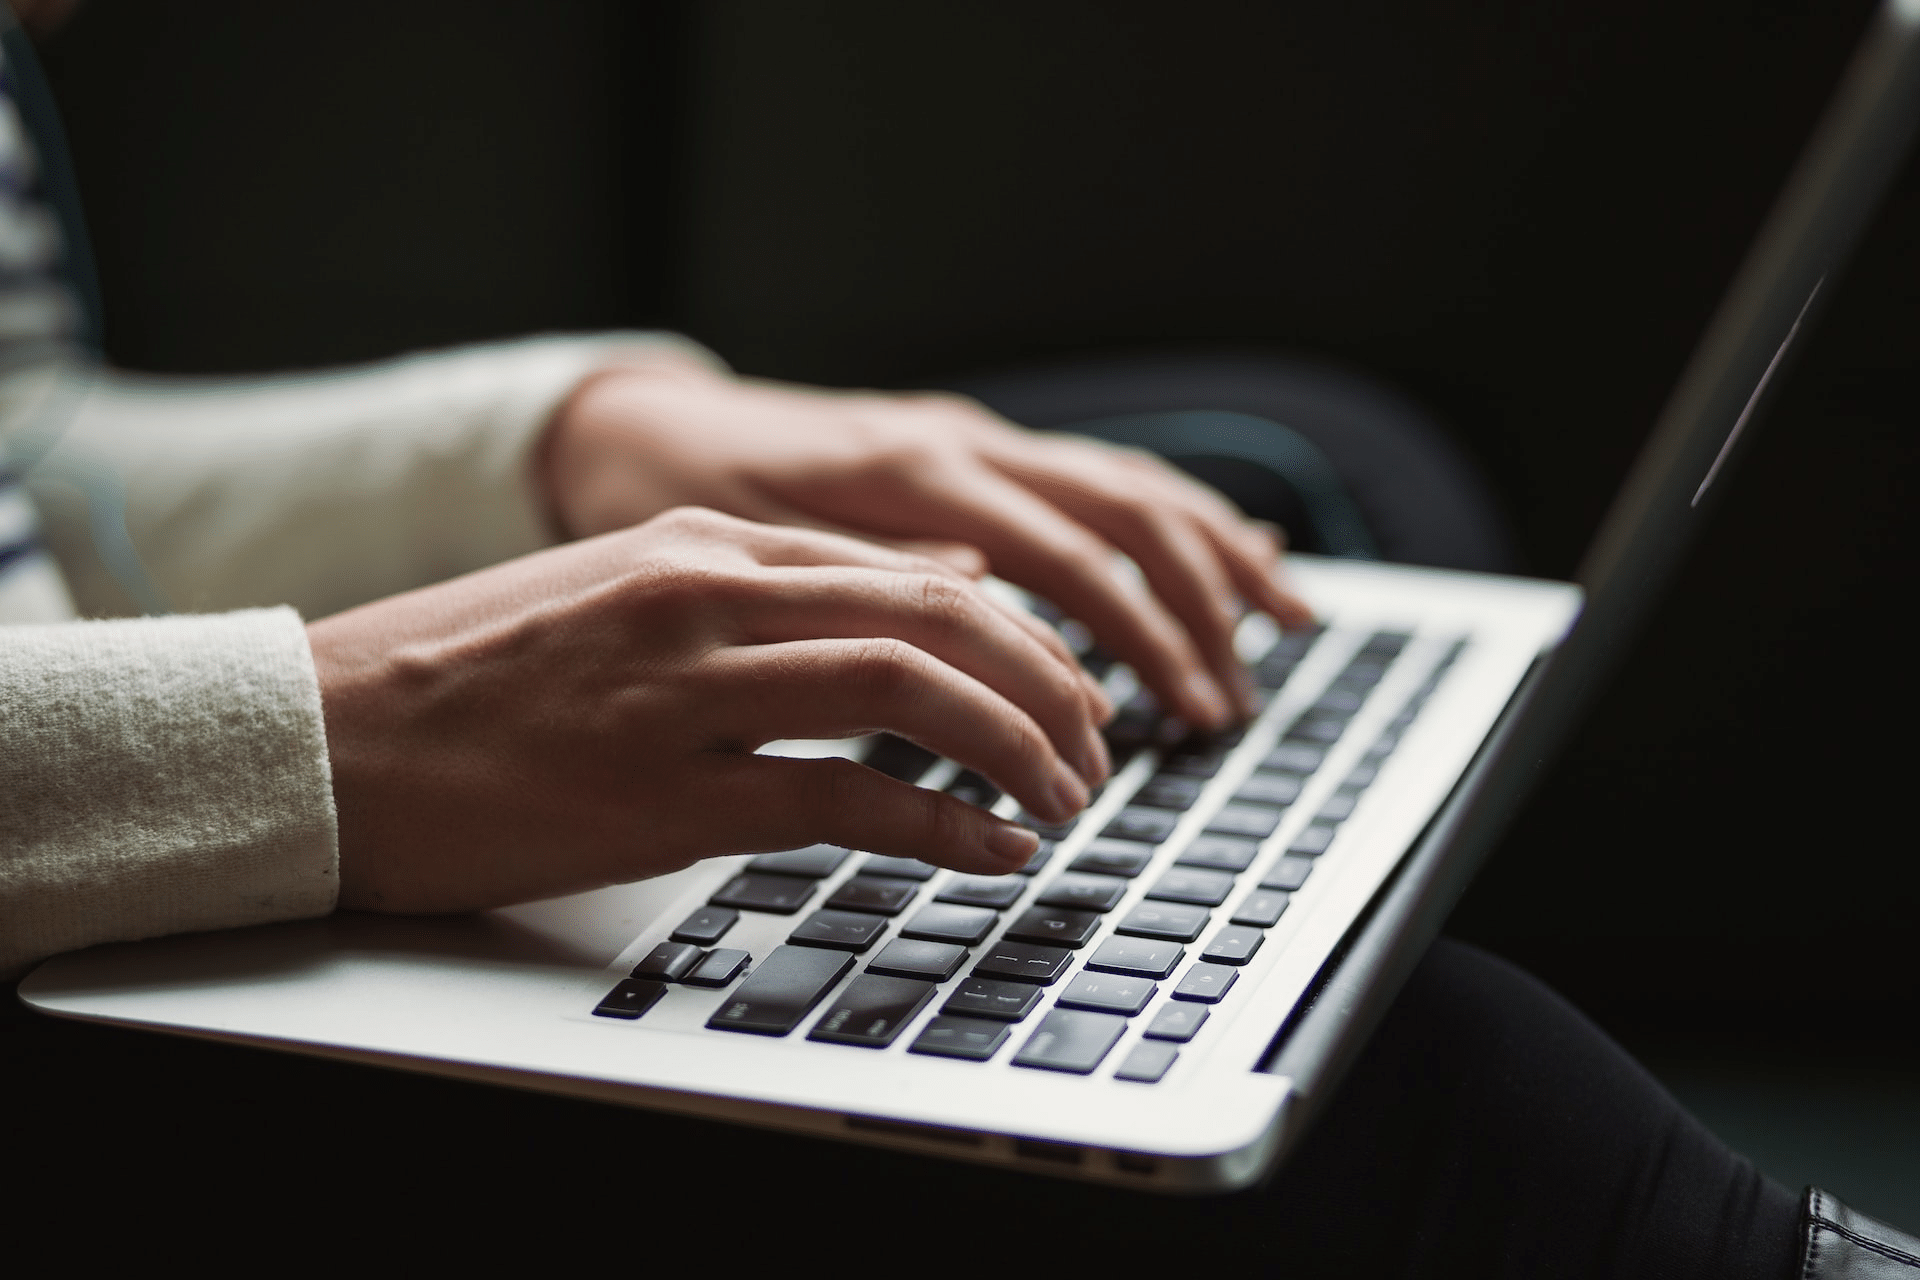 A shot of a woman's hands typing on an apple macbook